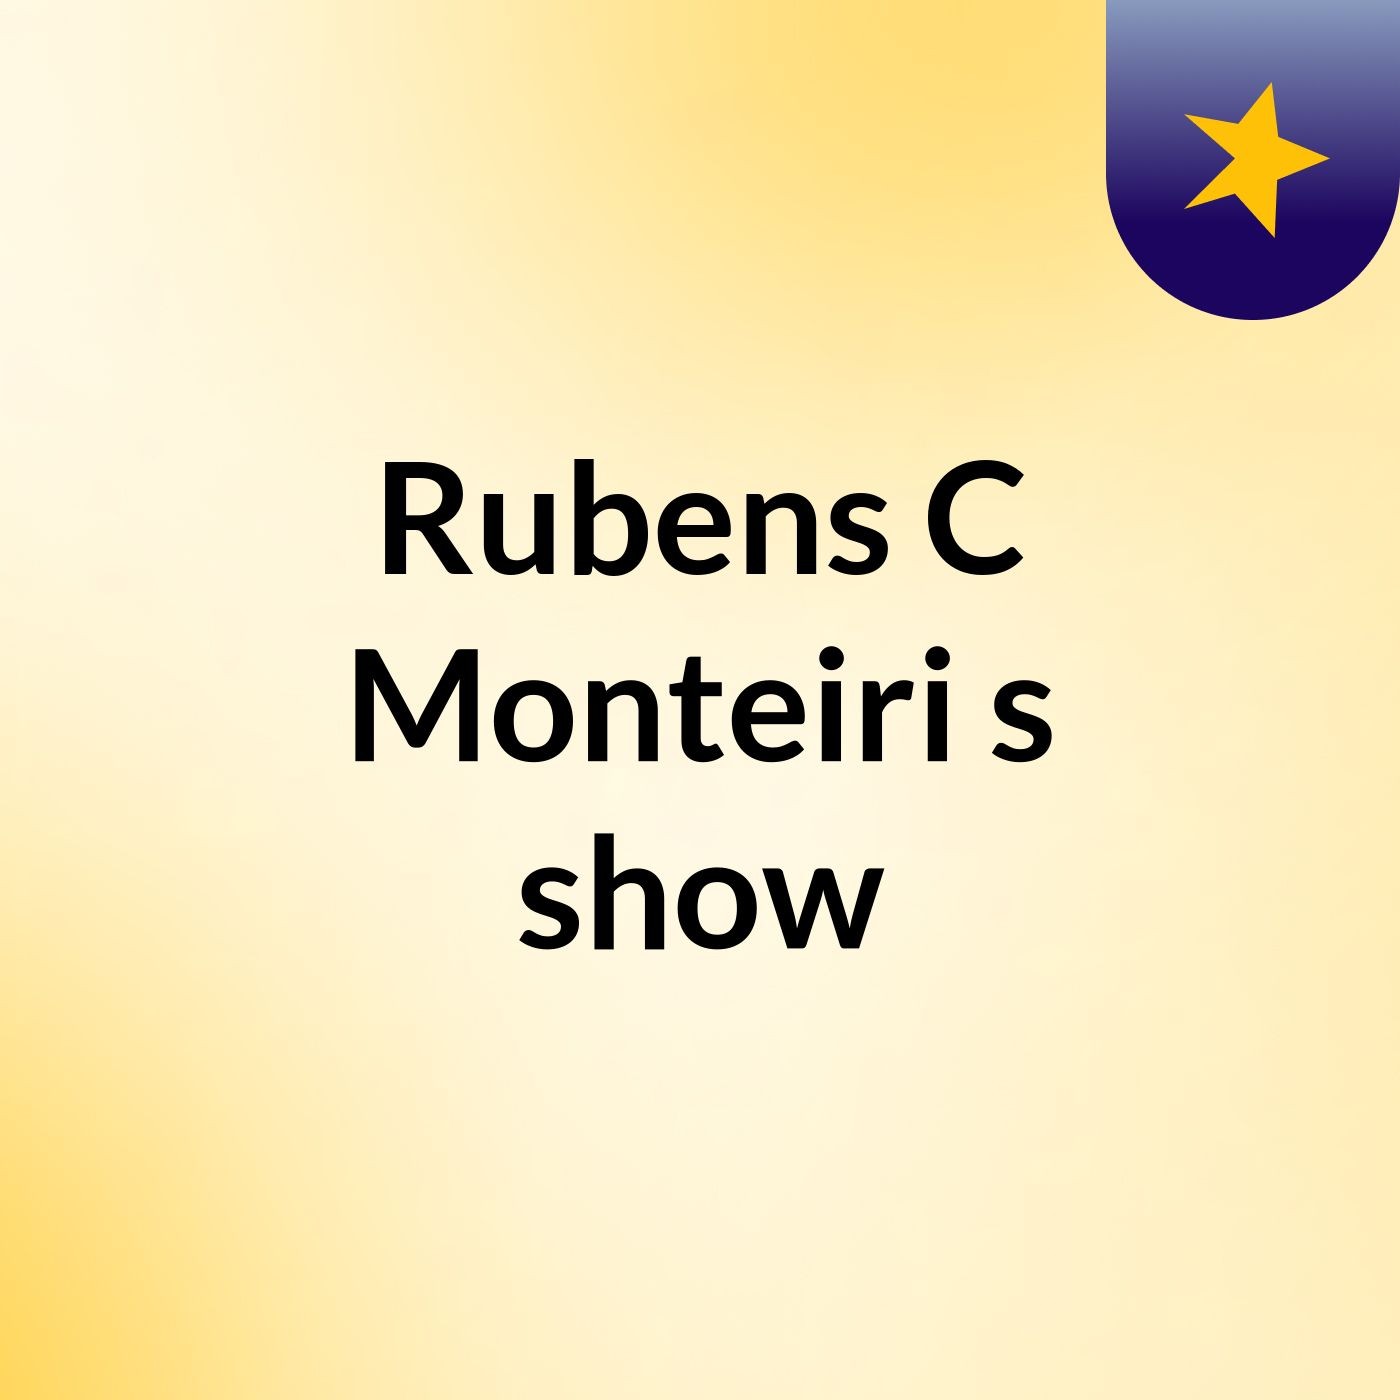 Rubens C Monteiri's show